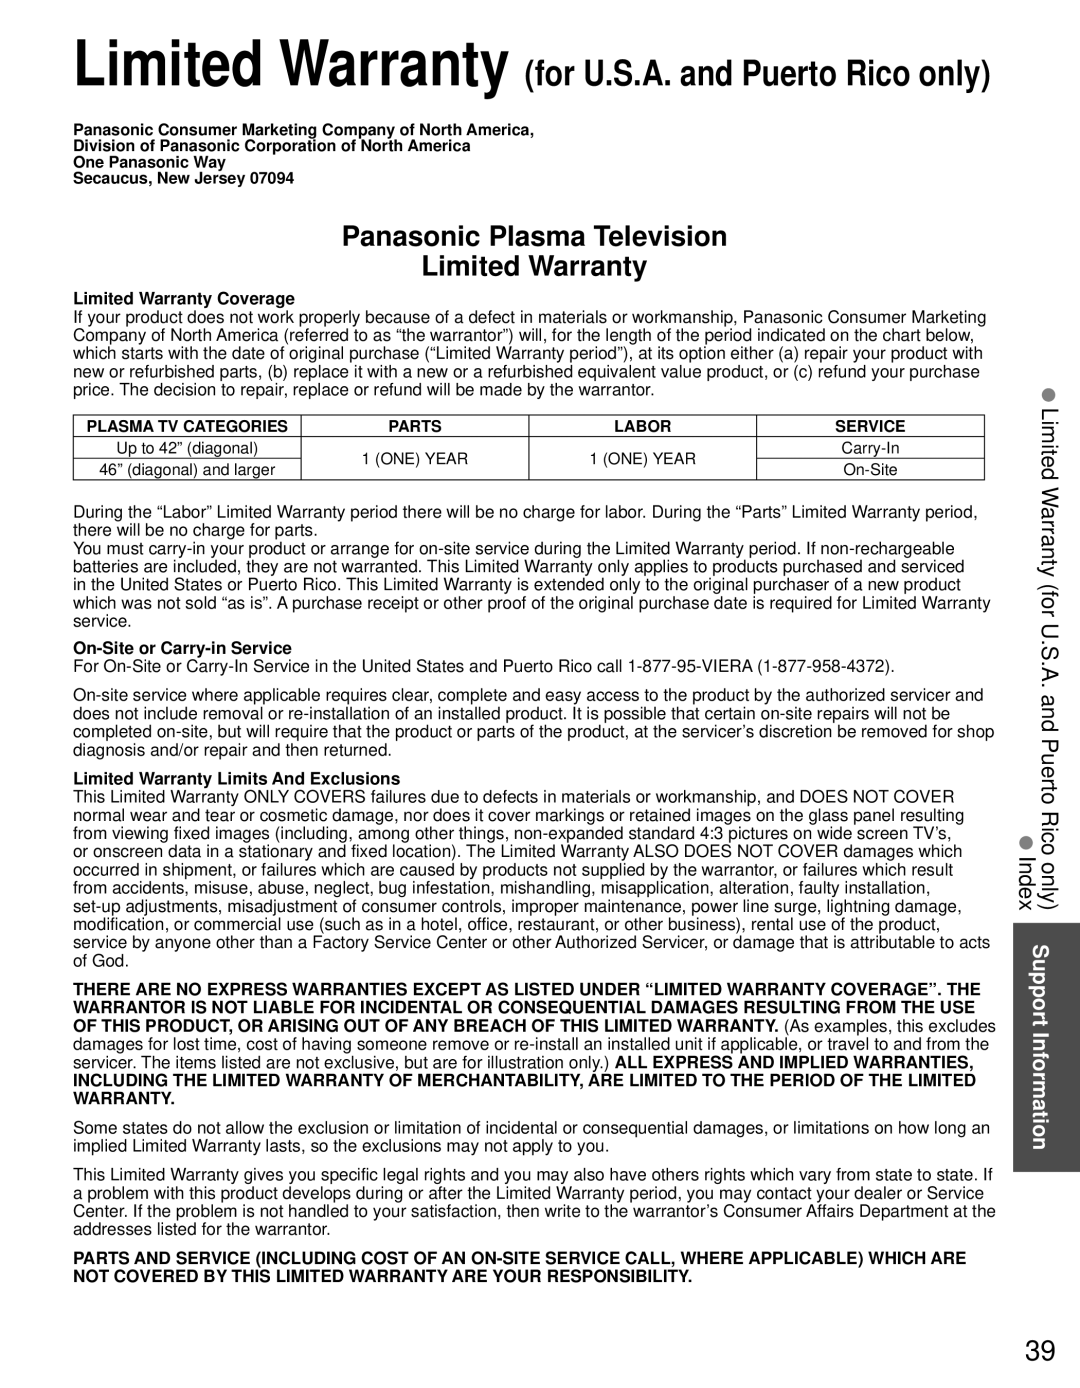 Panasonic TC-P50U50 Limited Warranty for U.S.A. and Puerto Rico only, Panasonic Plasma Television Limited Warranty 